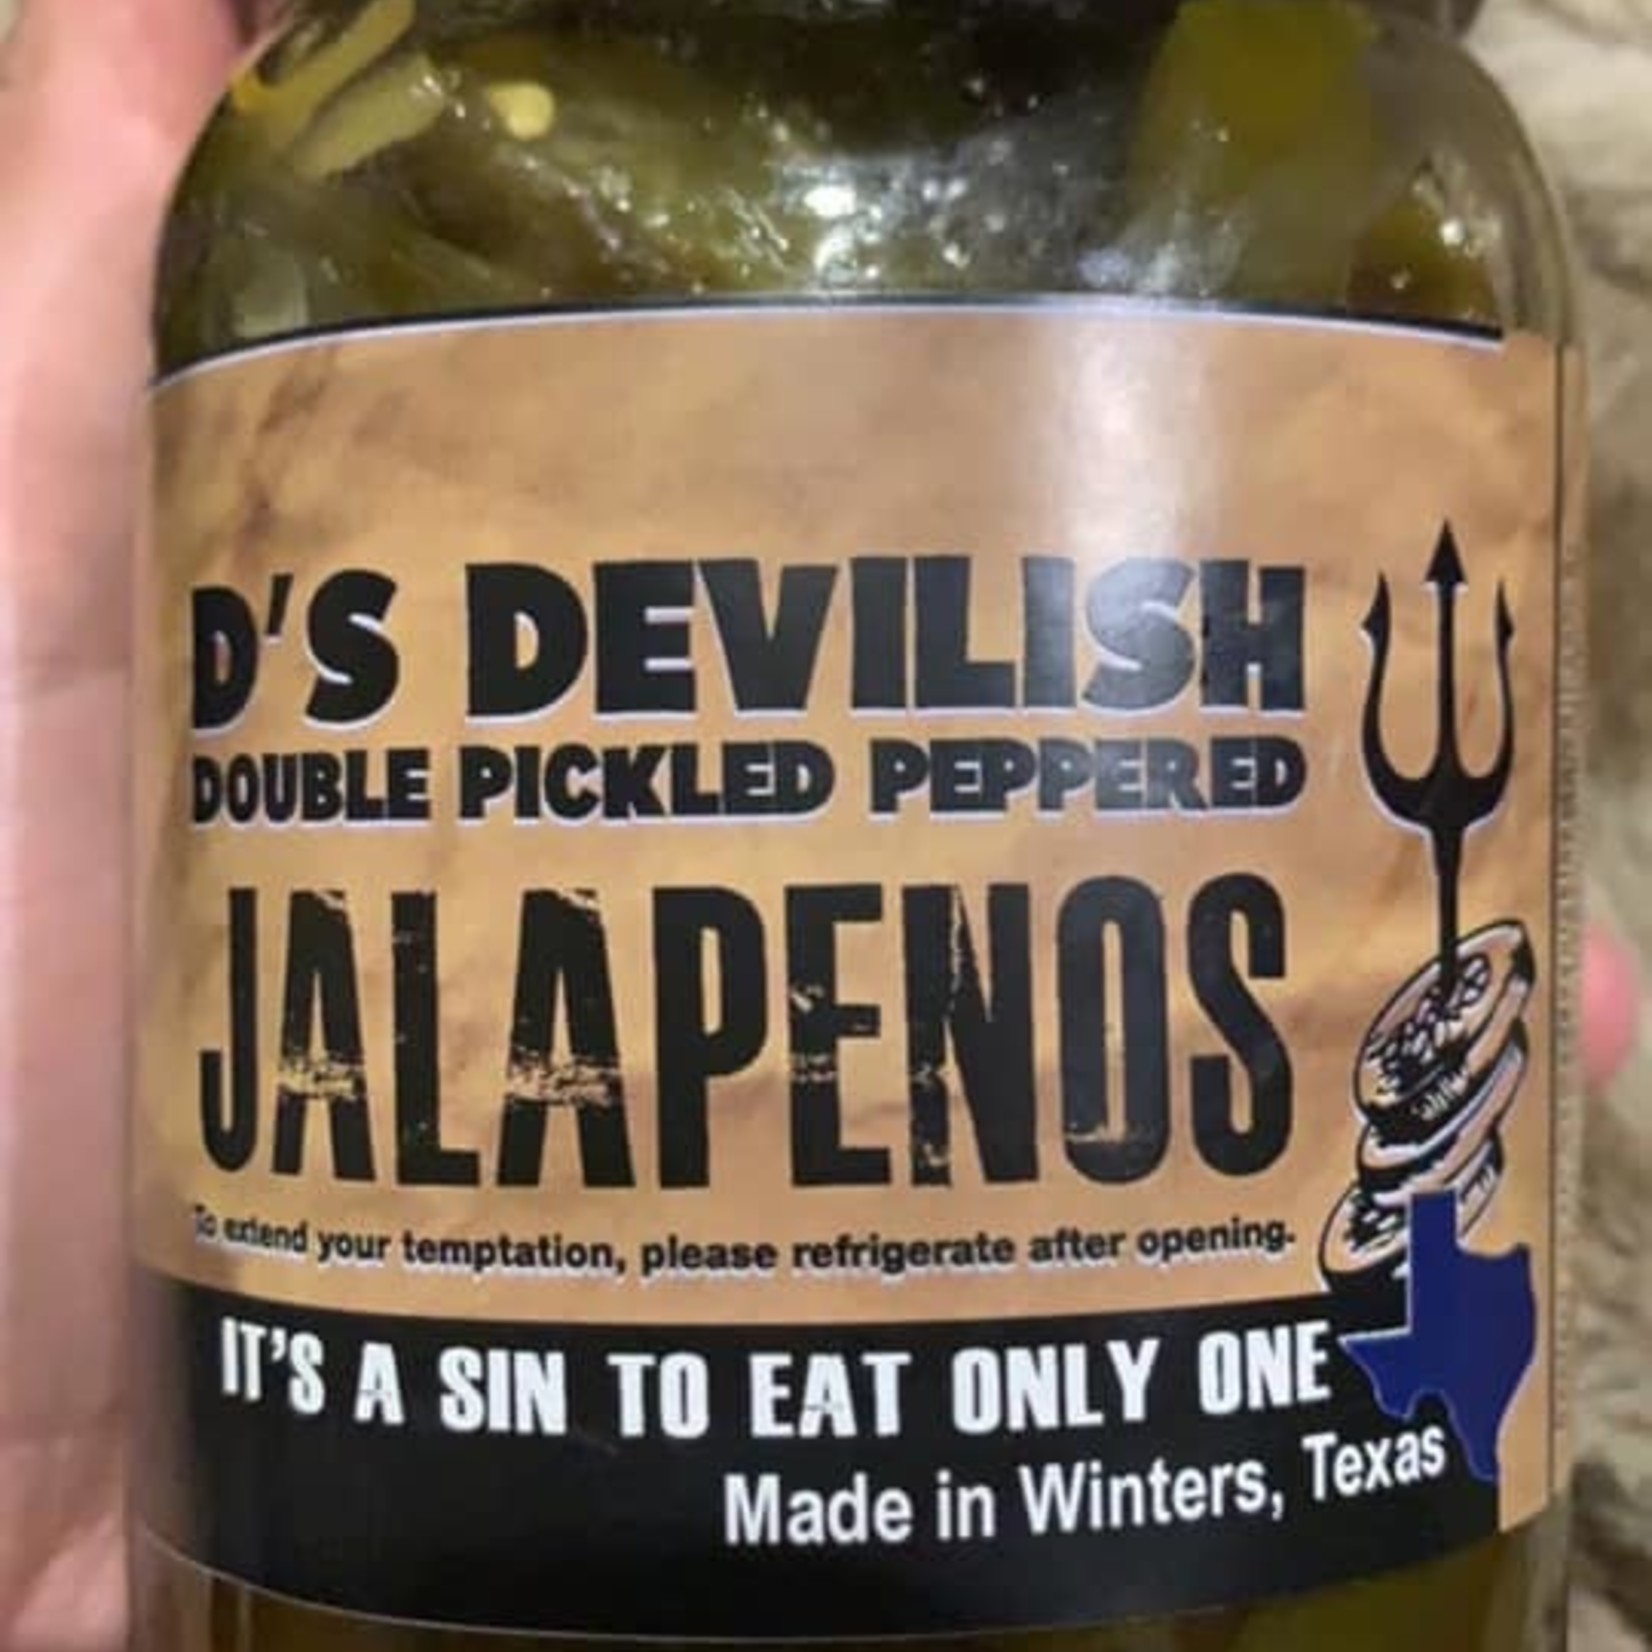 D's Devilish Double Pickled Peppered Pickles D's Devilish Double Pickled Peppered Pickles- Jalapenos